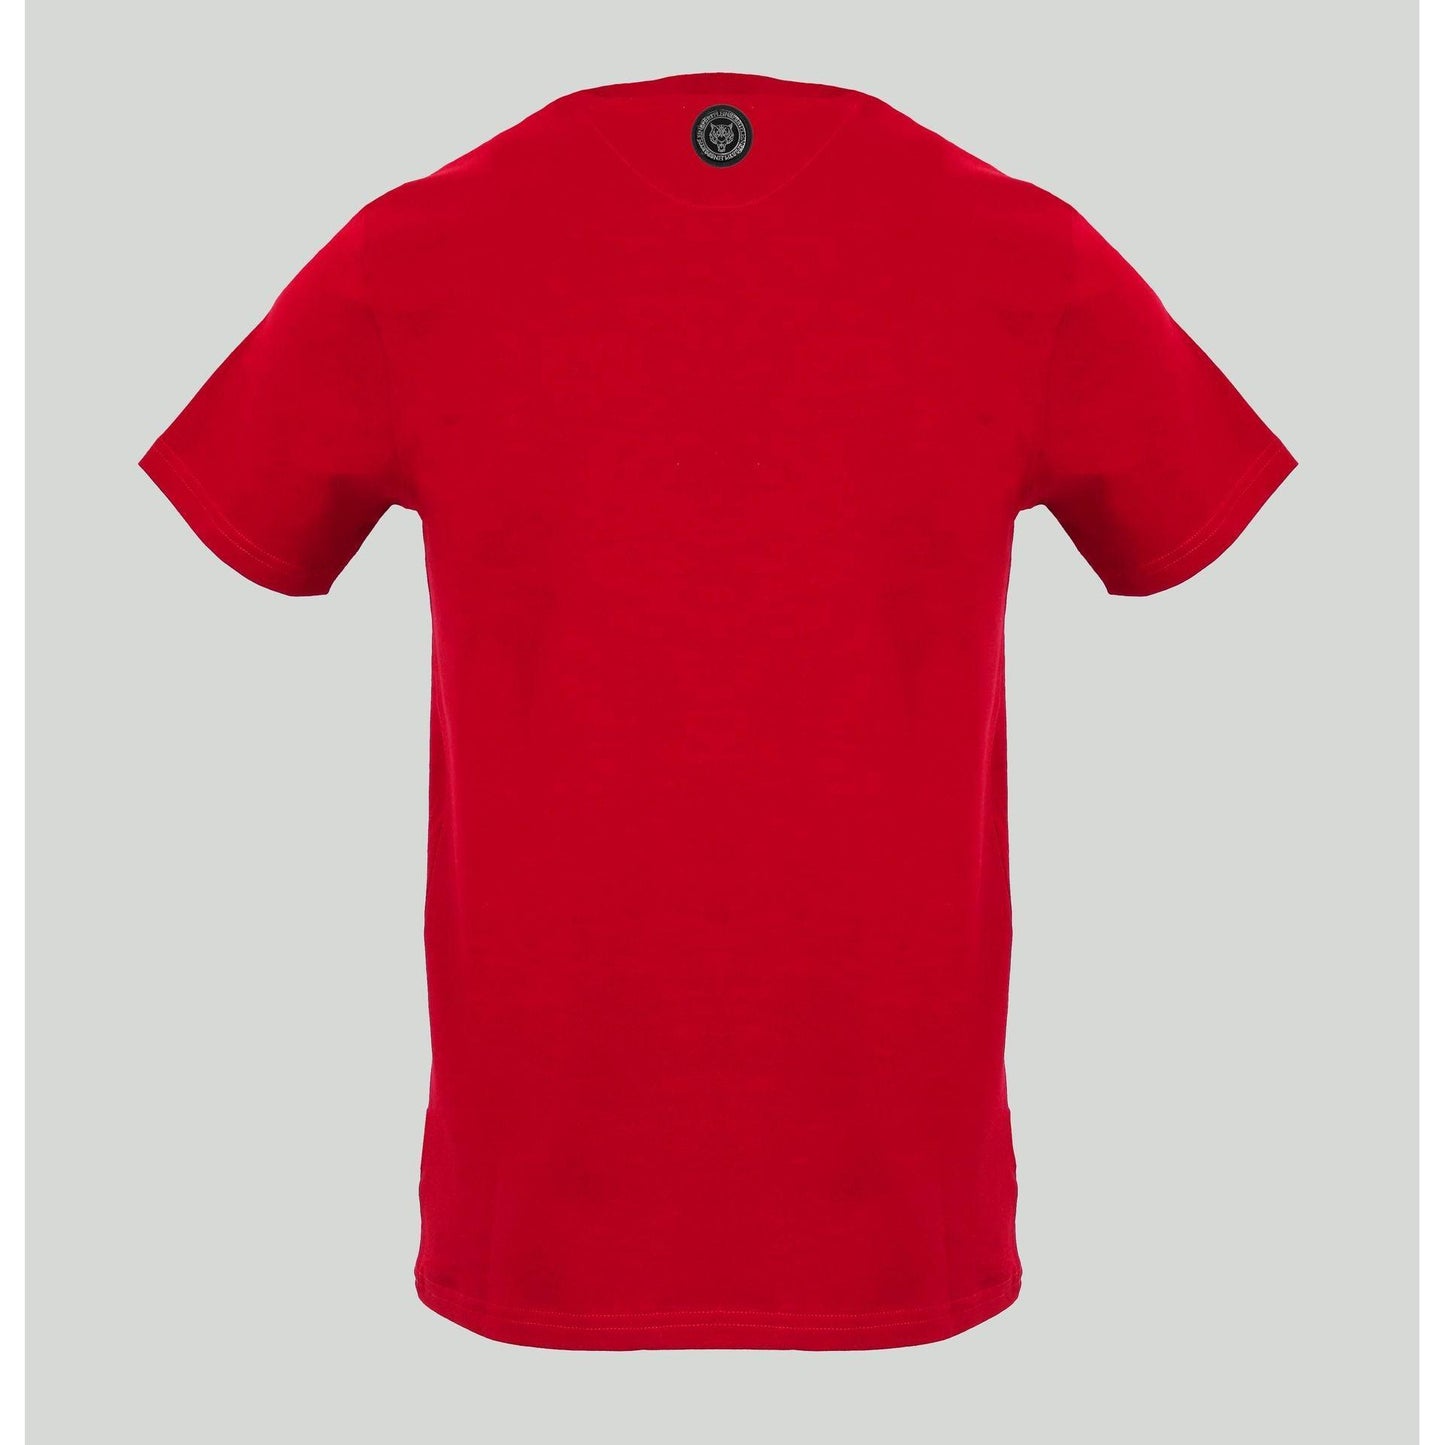 Plein Sport Men T-shirts - Red Brand T-shirts - T-Shirt - Guocali